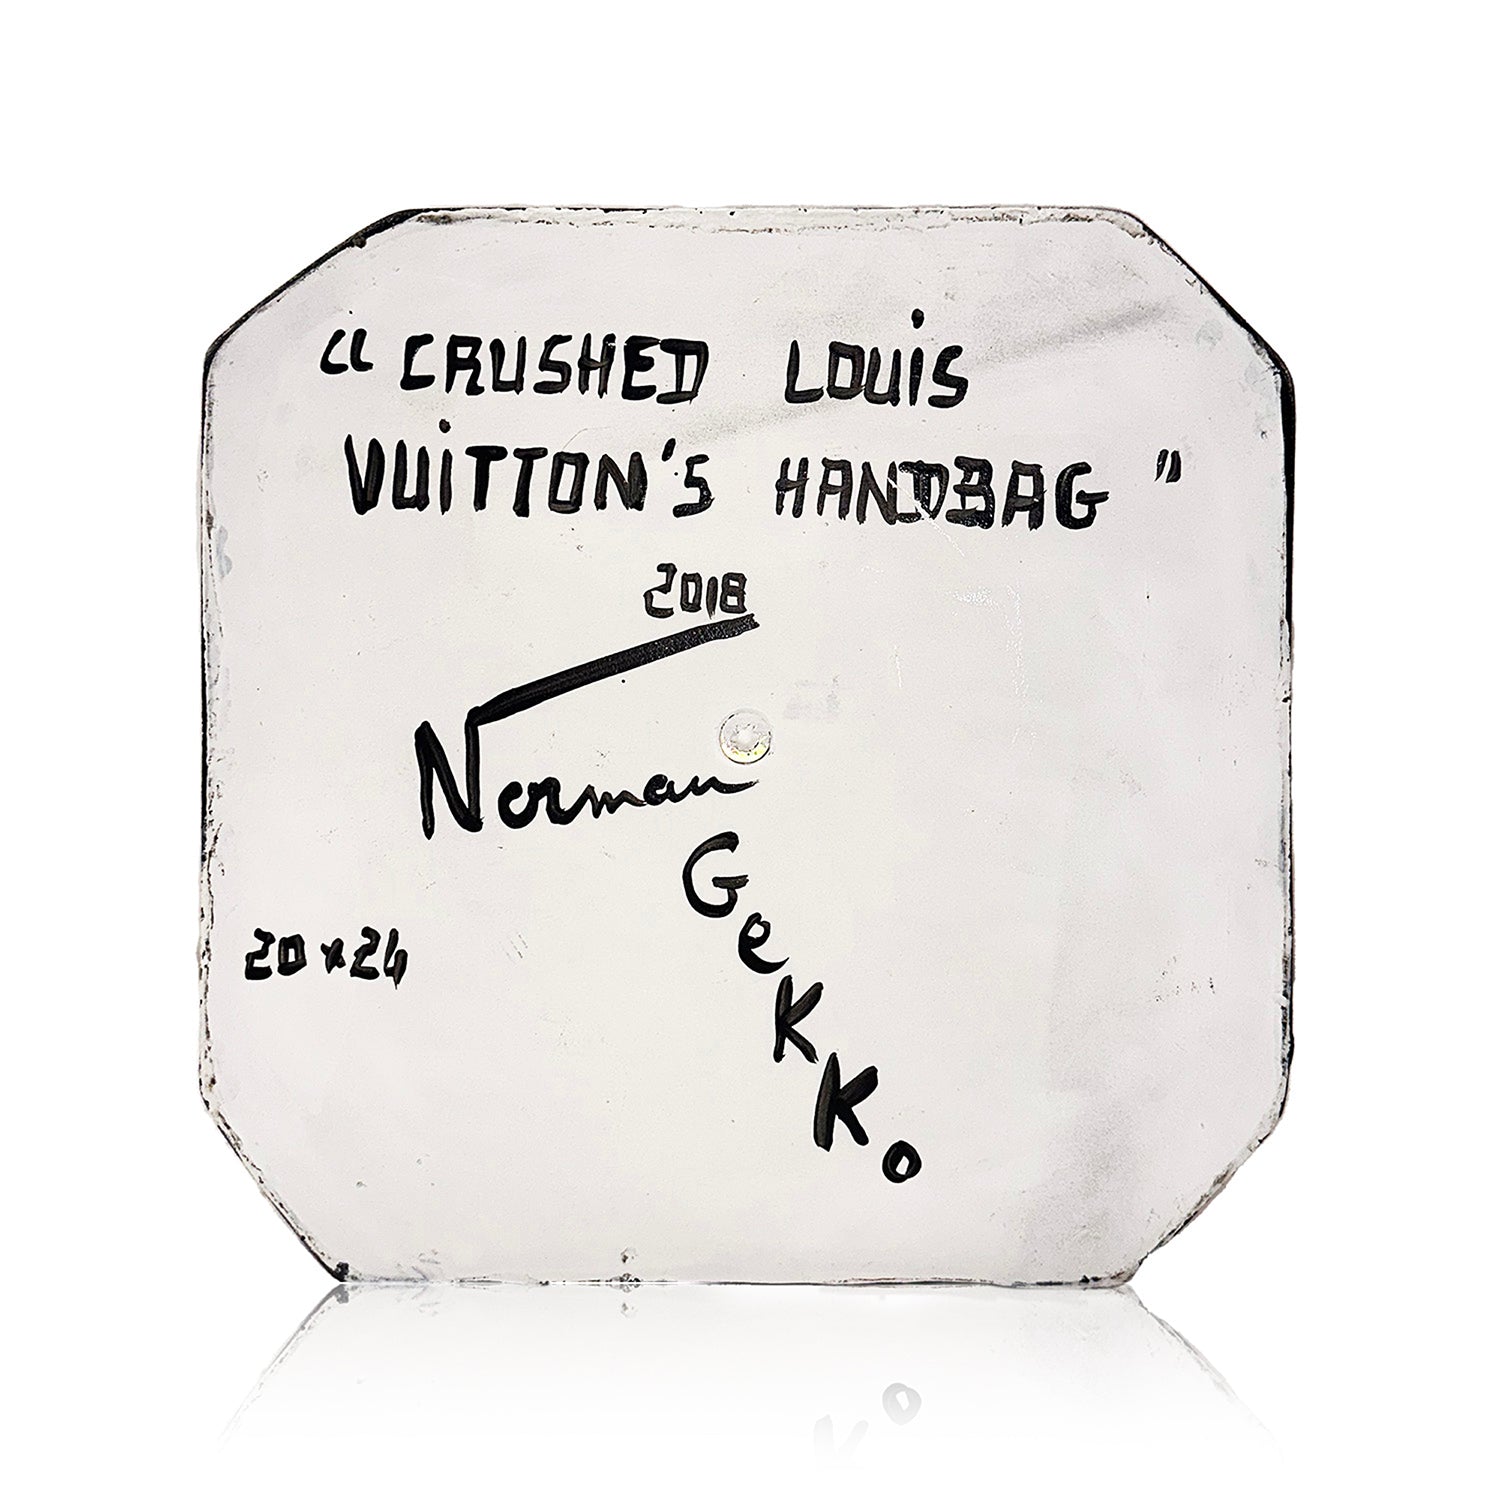 Crushed Louis Vuitton Handbag - Norman Gekko - Sculptures